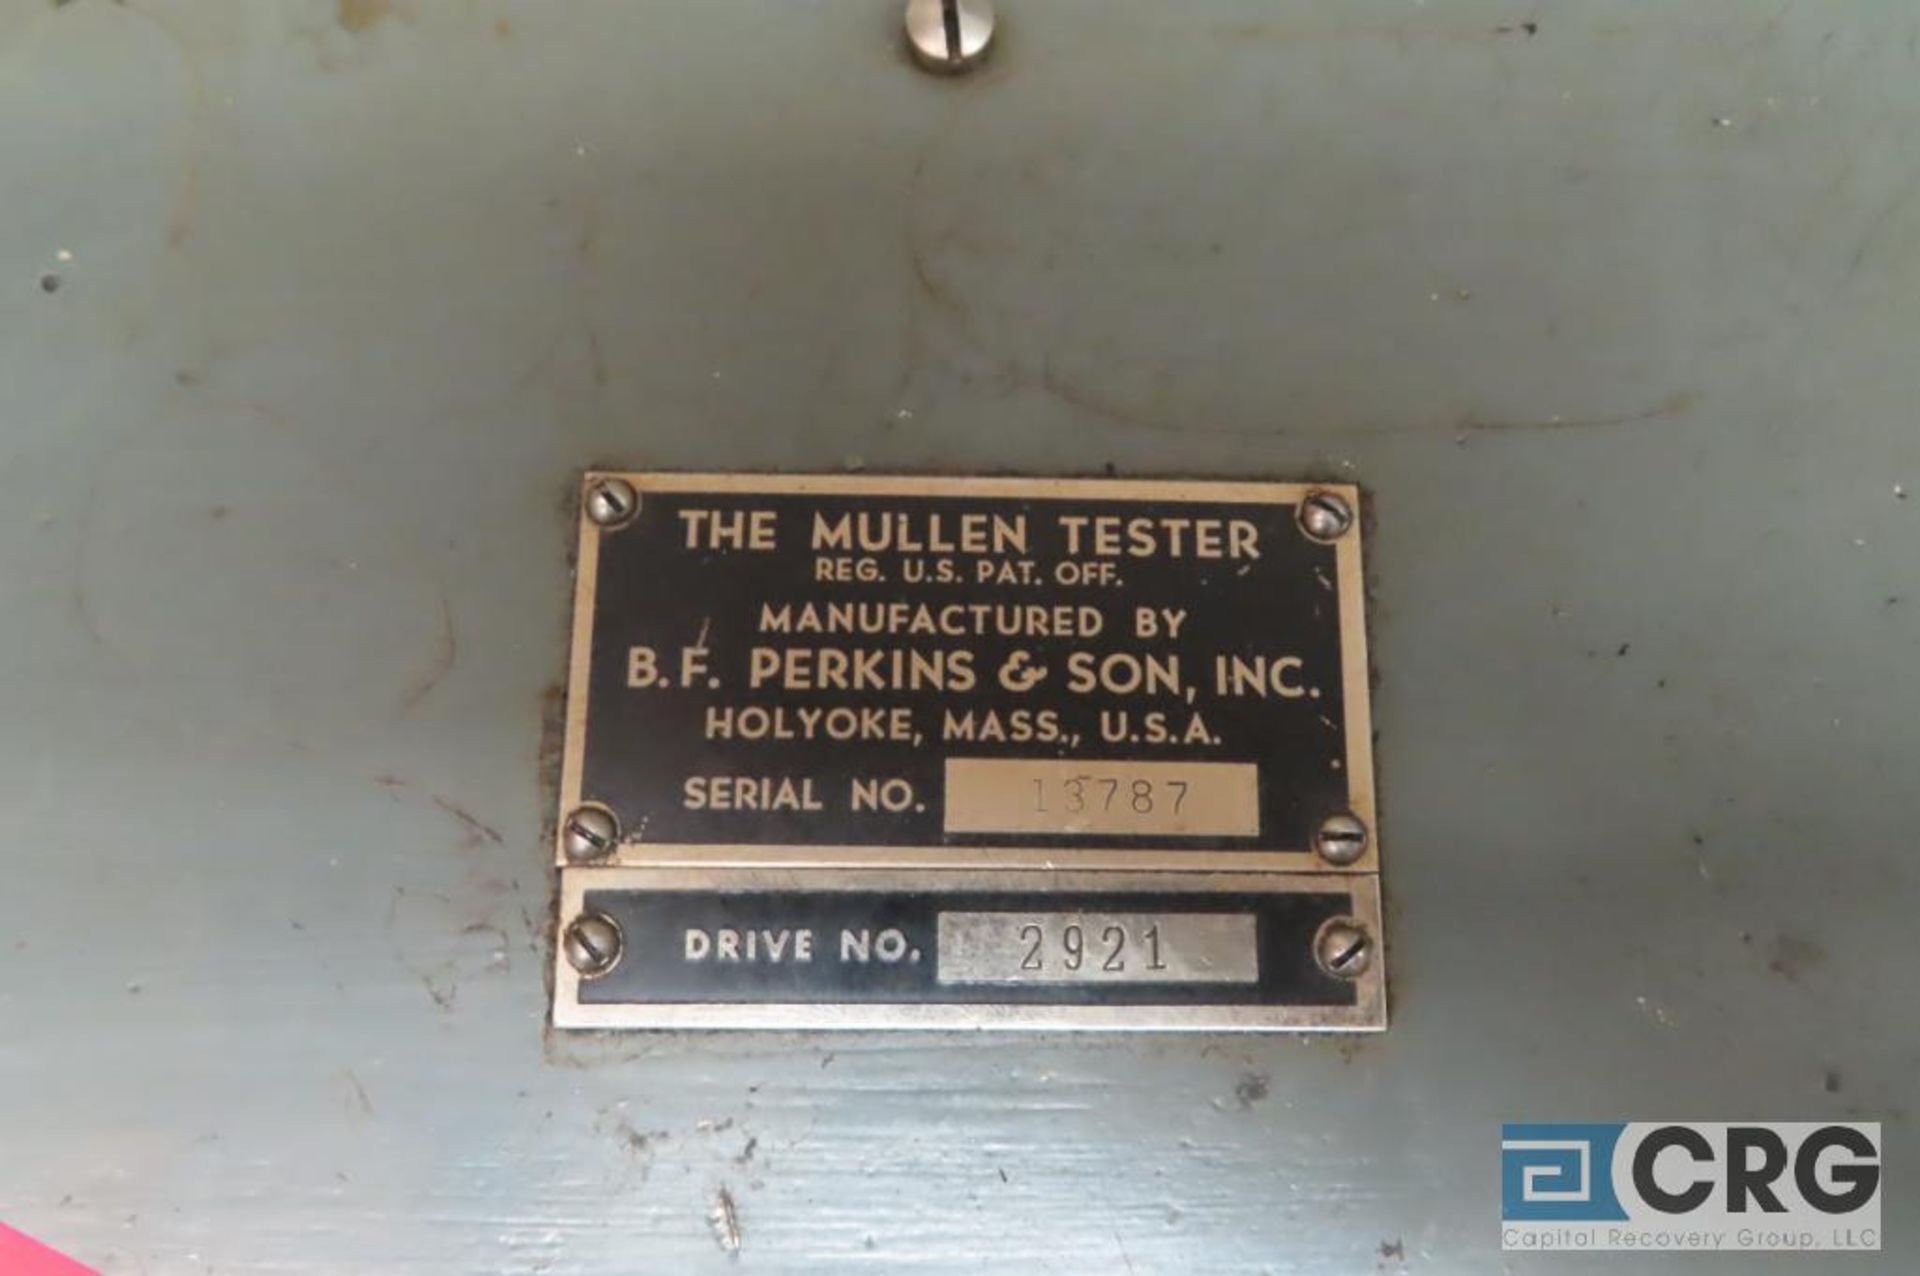 Mullen tester - Image 2 of 2